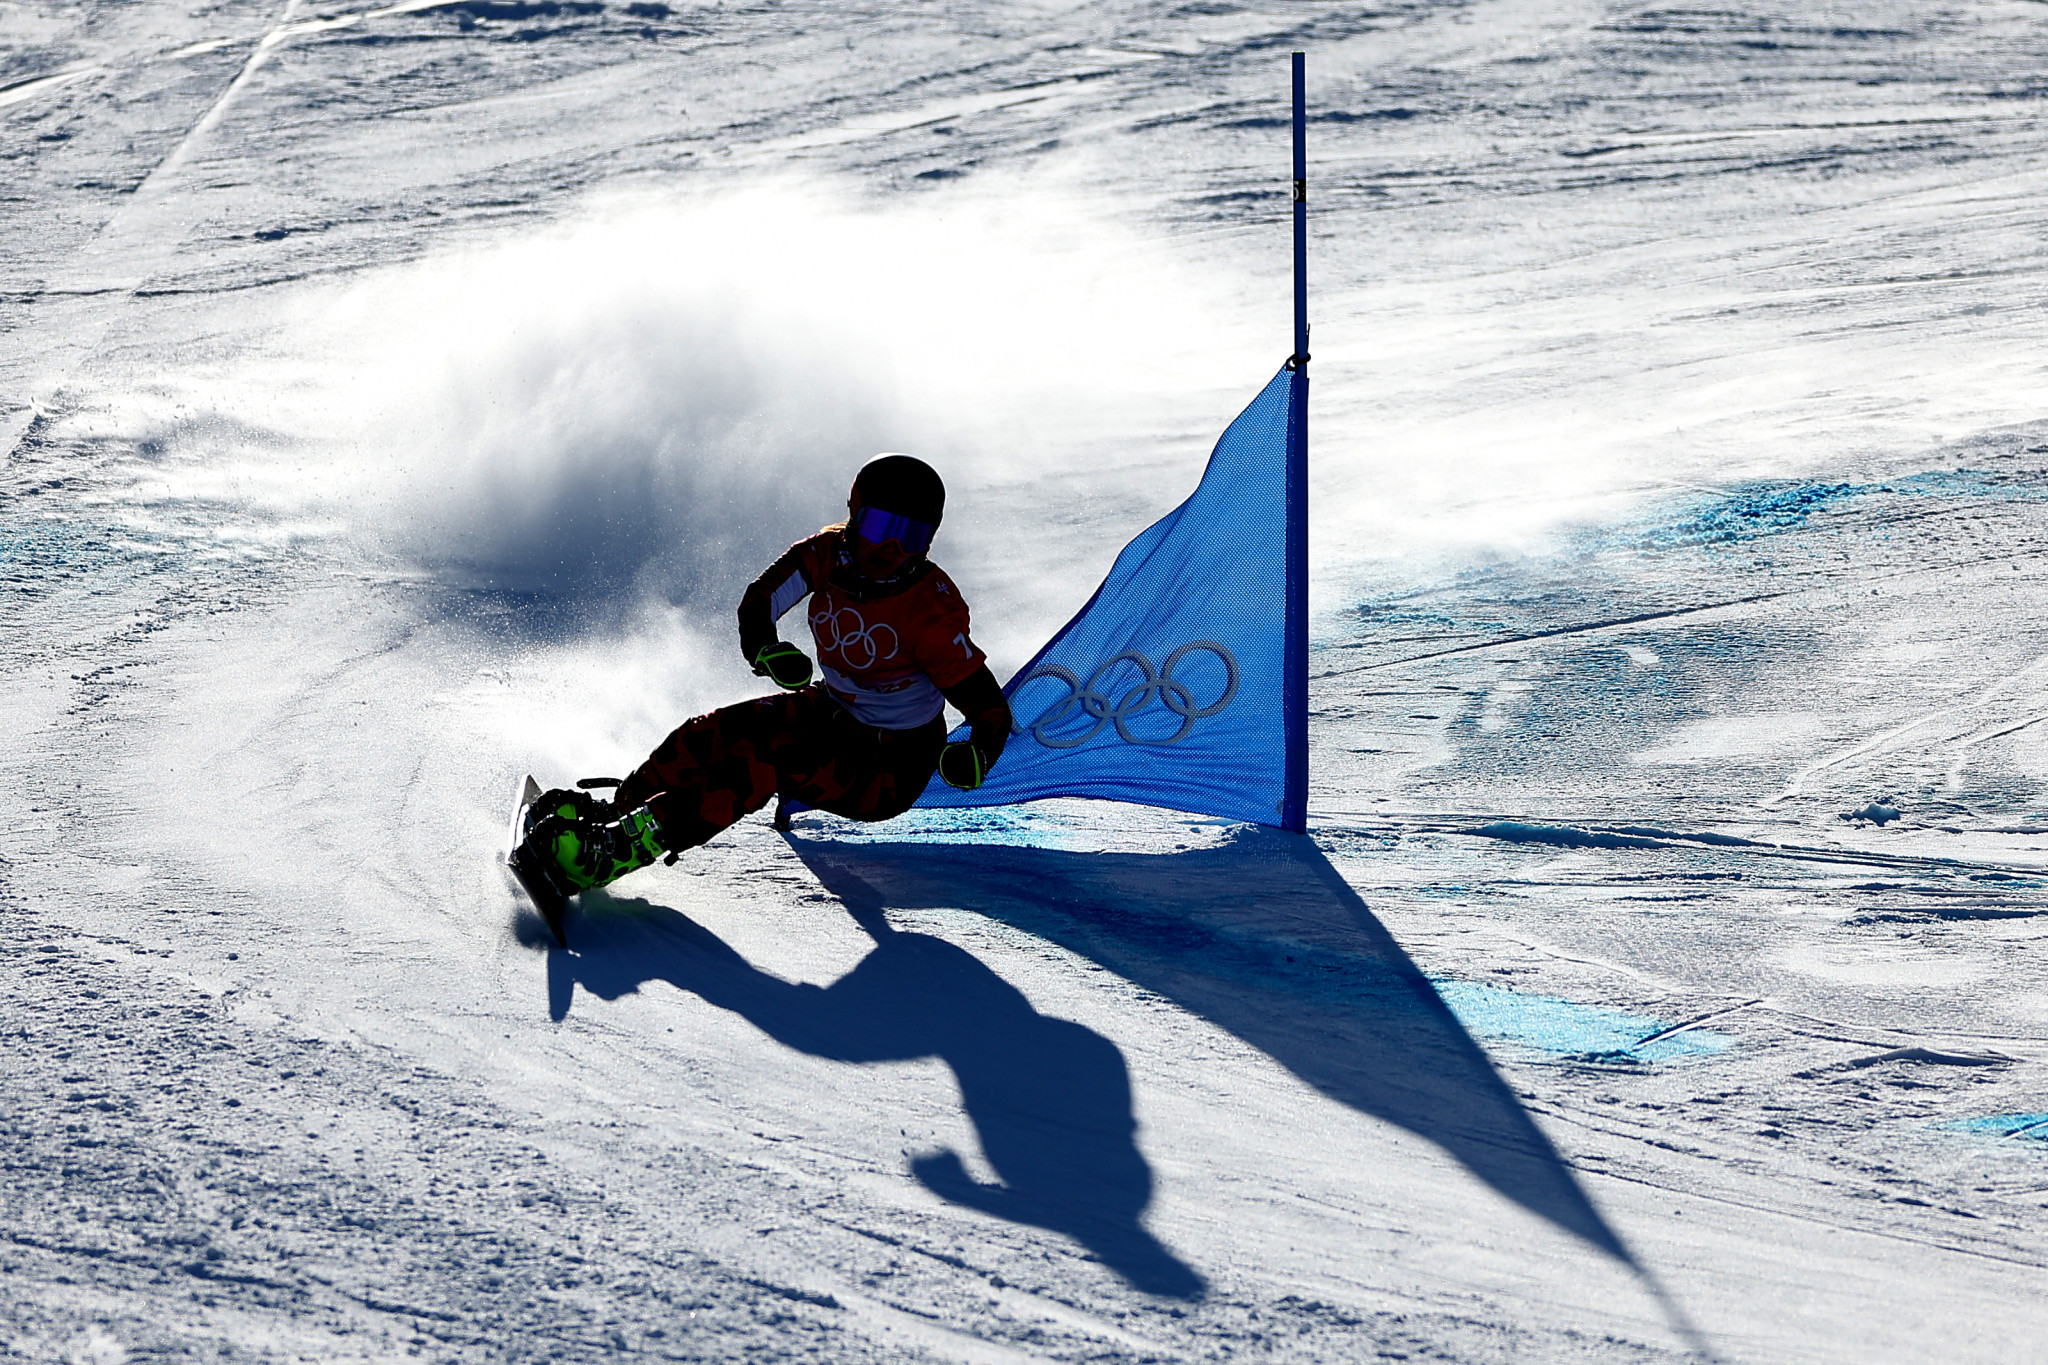 Rogla to host final giant slalom event of Alpine Snowboard World Cup season